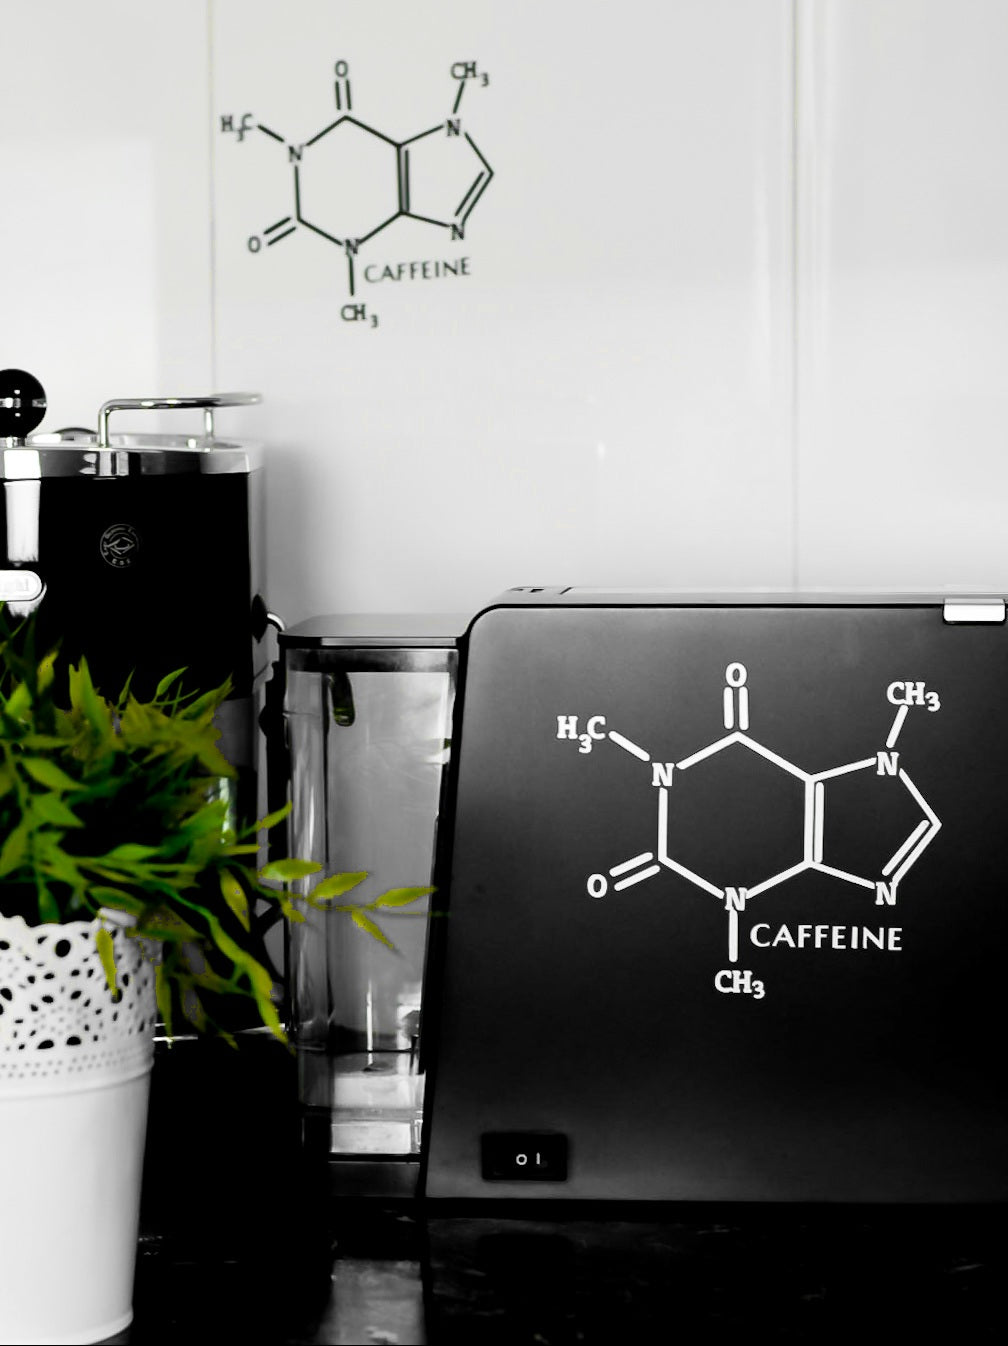 Coffee Vinyl Decal - Caffeine Chemical Structure - Fun Coffee Art Wall Decal Sticker